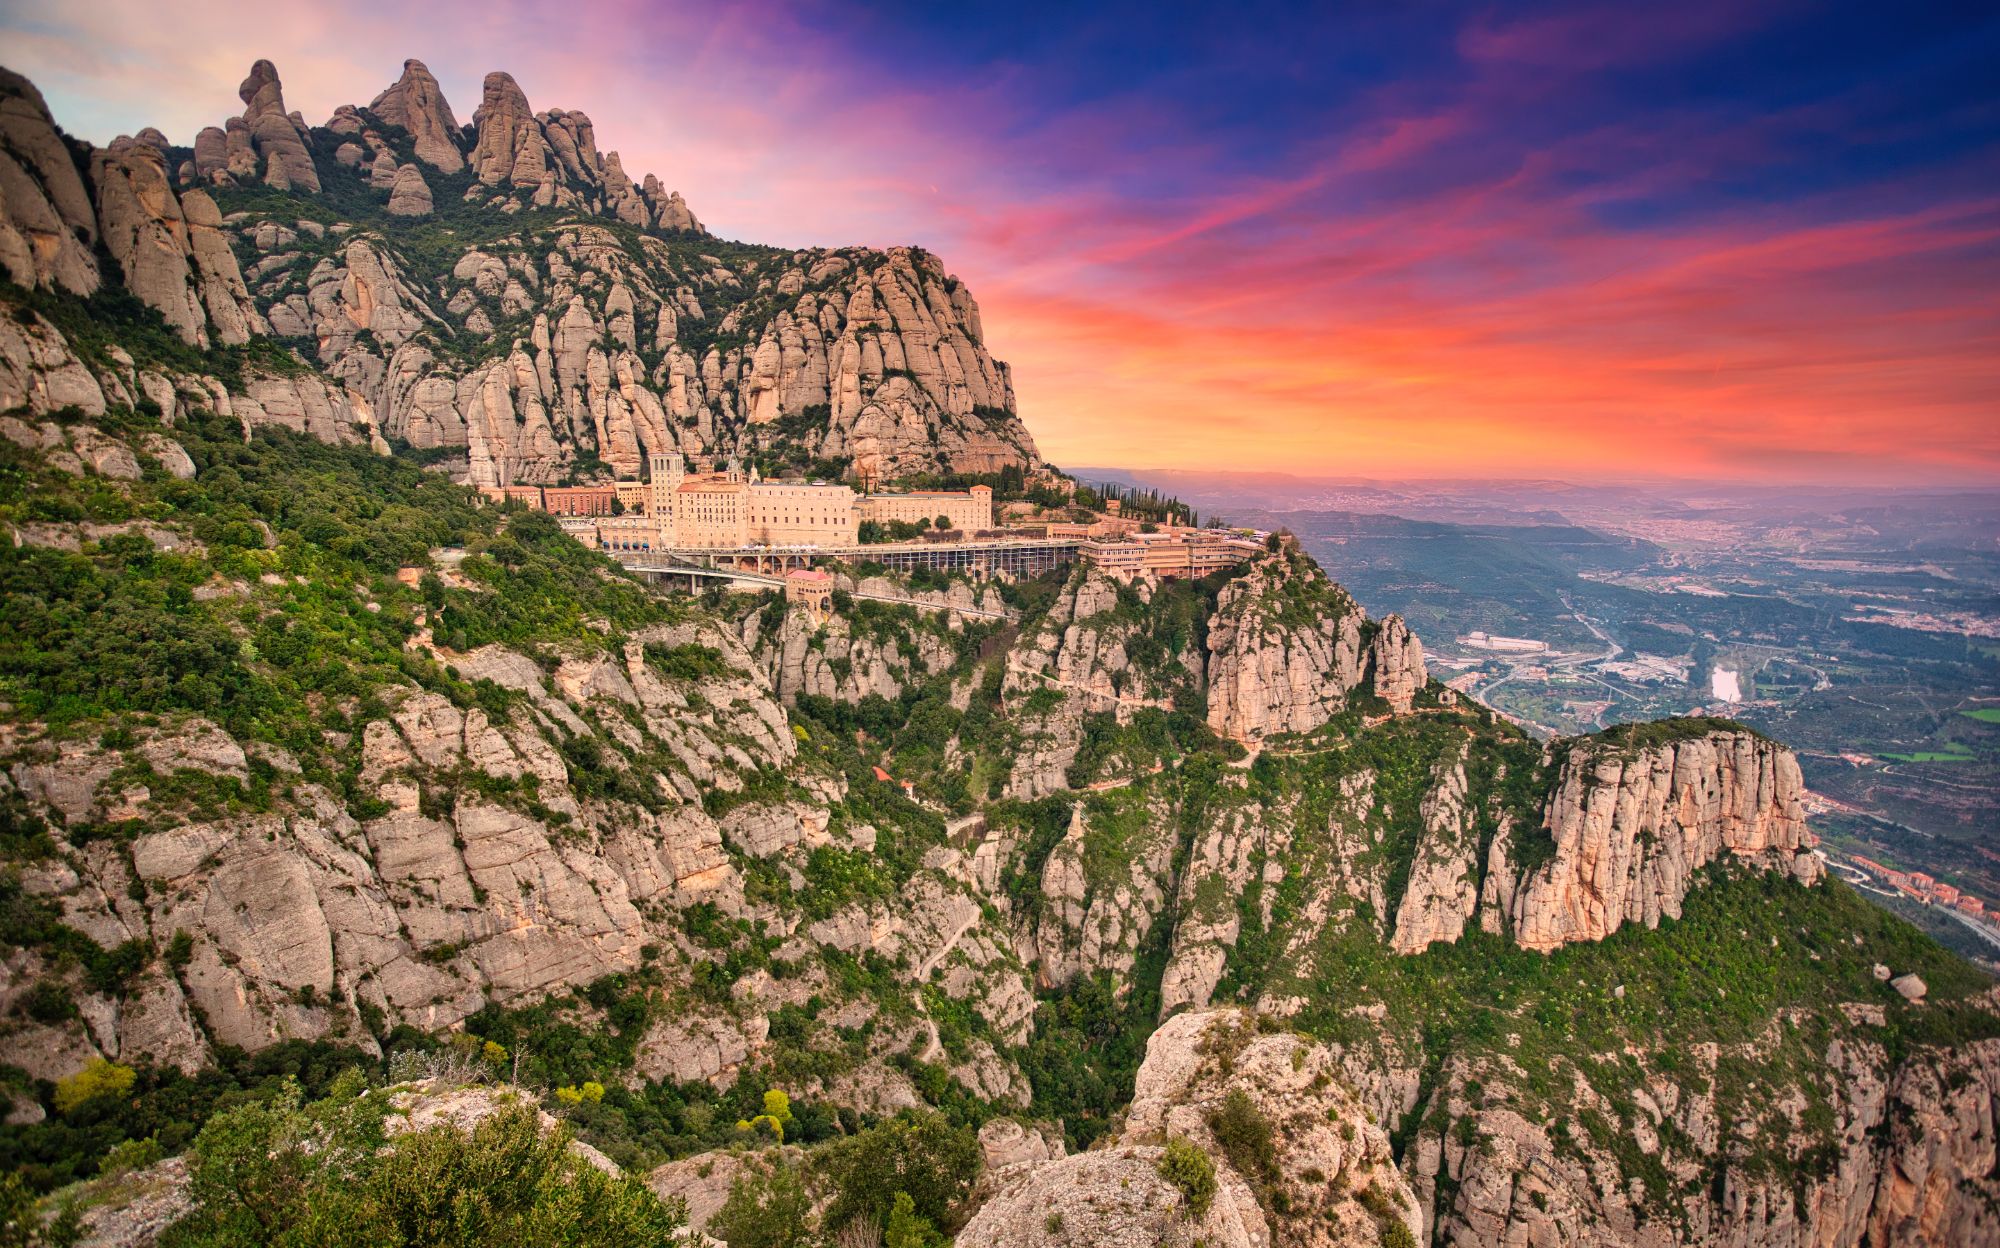 Image of Montserrat massif